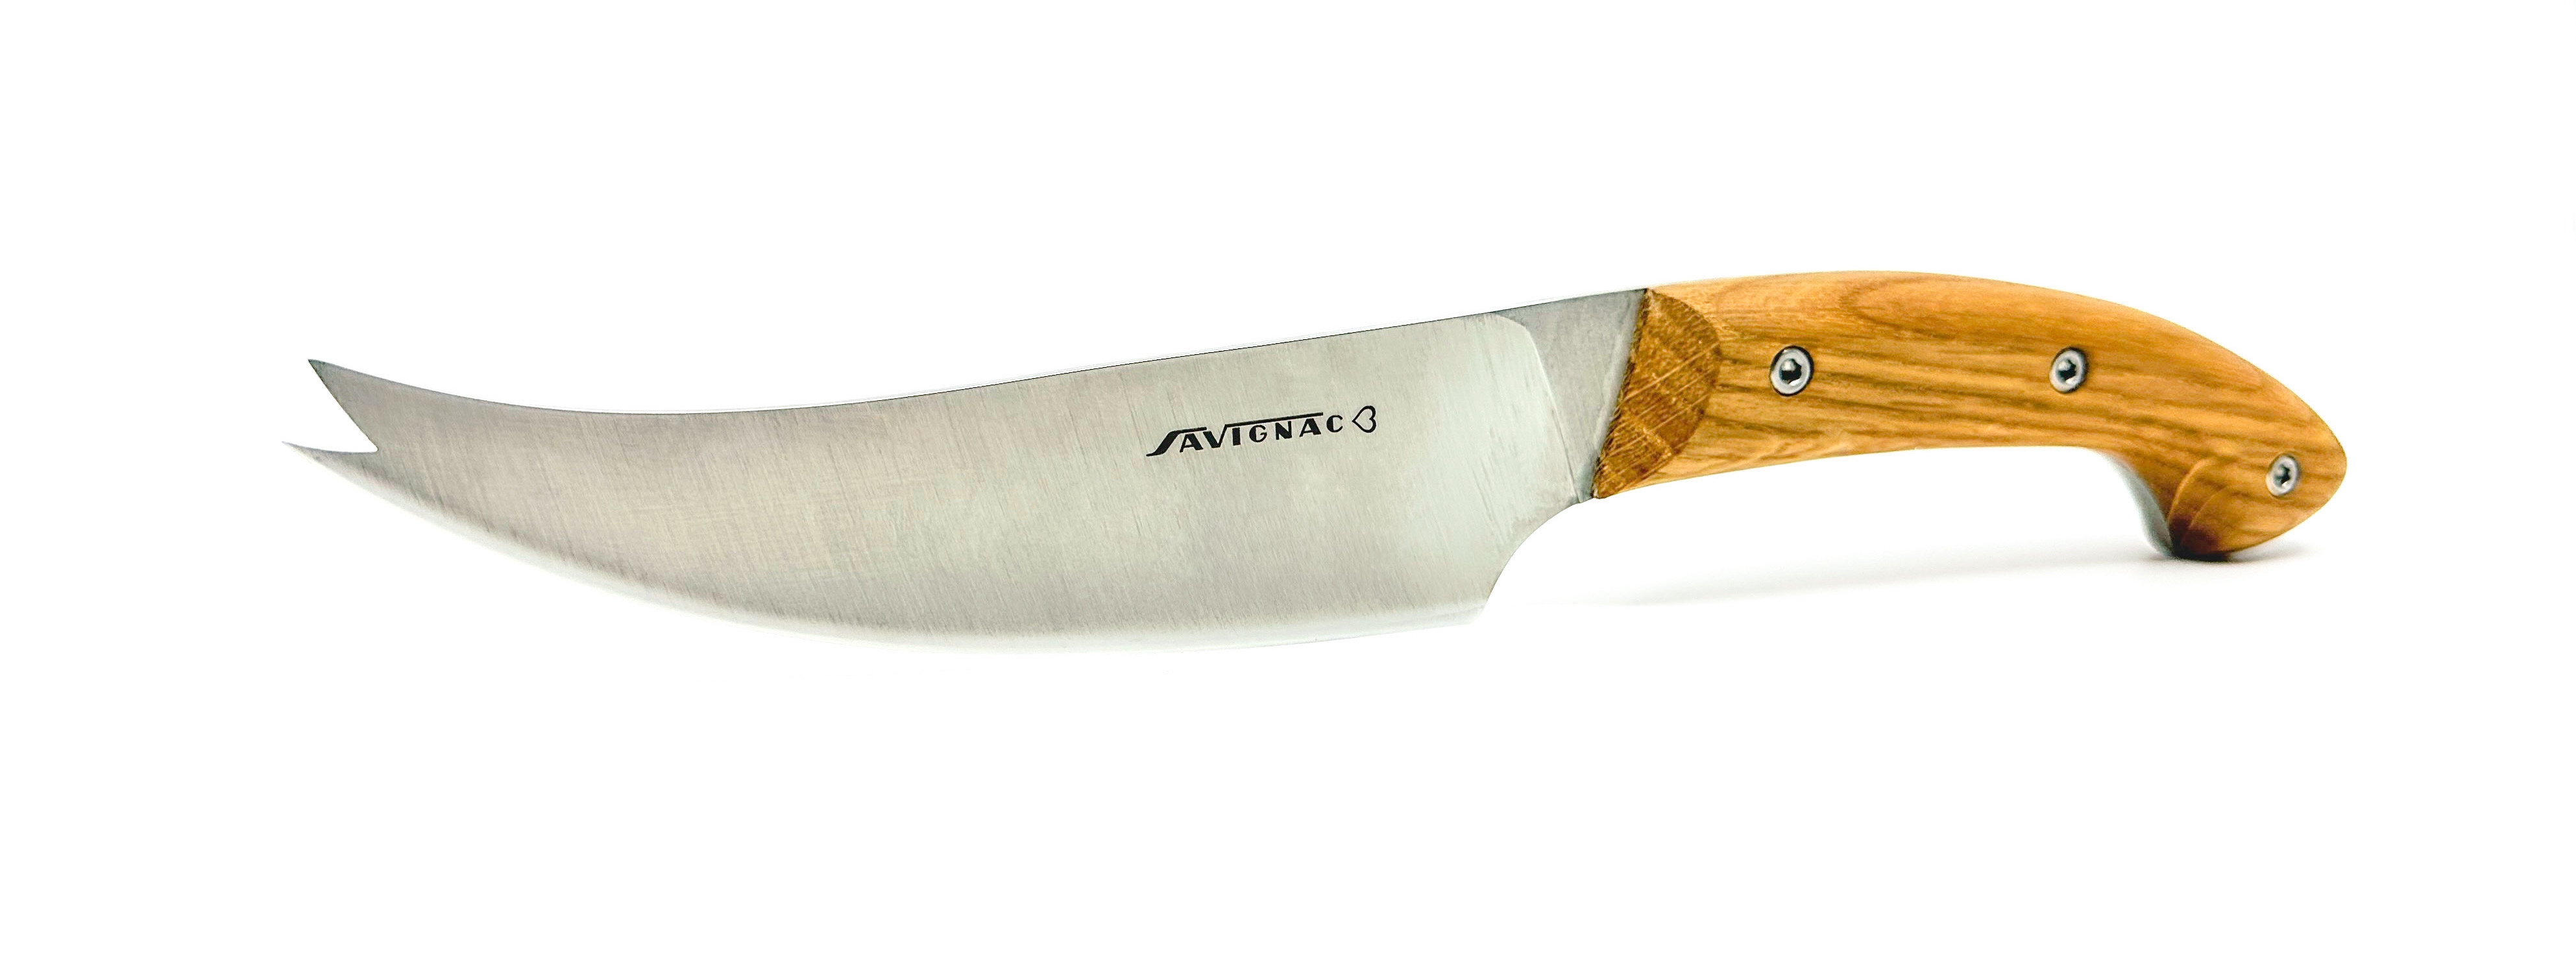 Ariegois folding knife full damasteel - Coutellerie Savignac